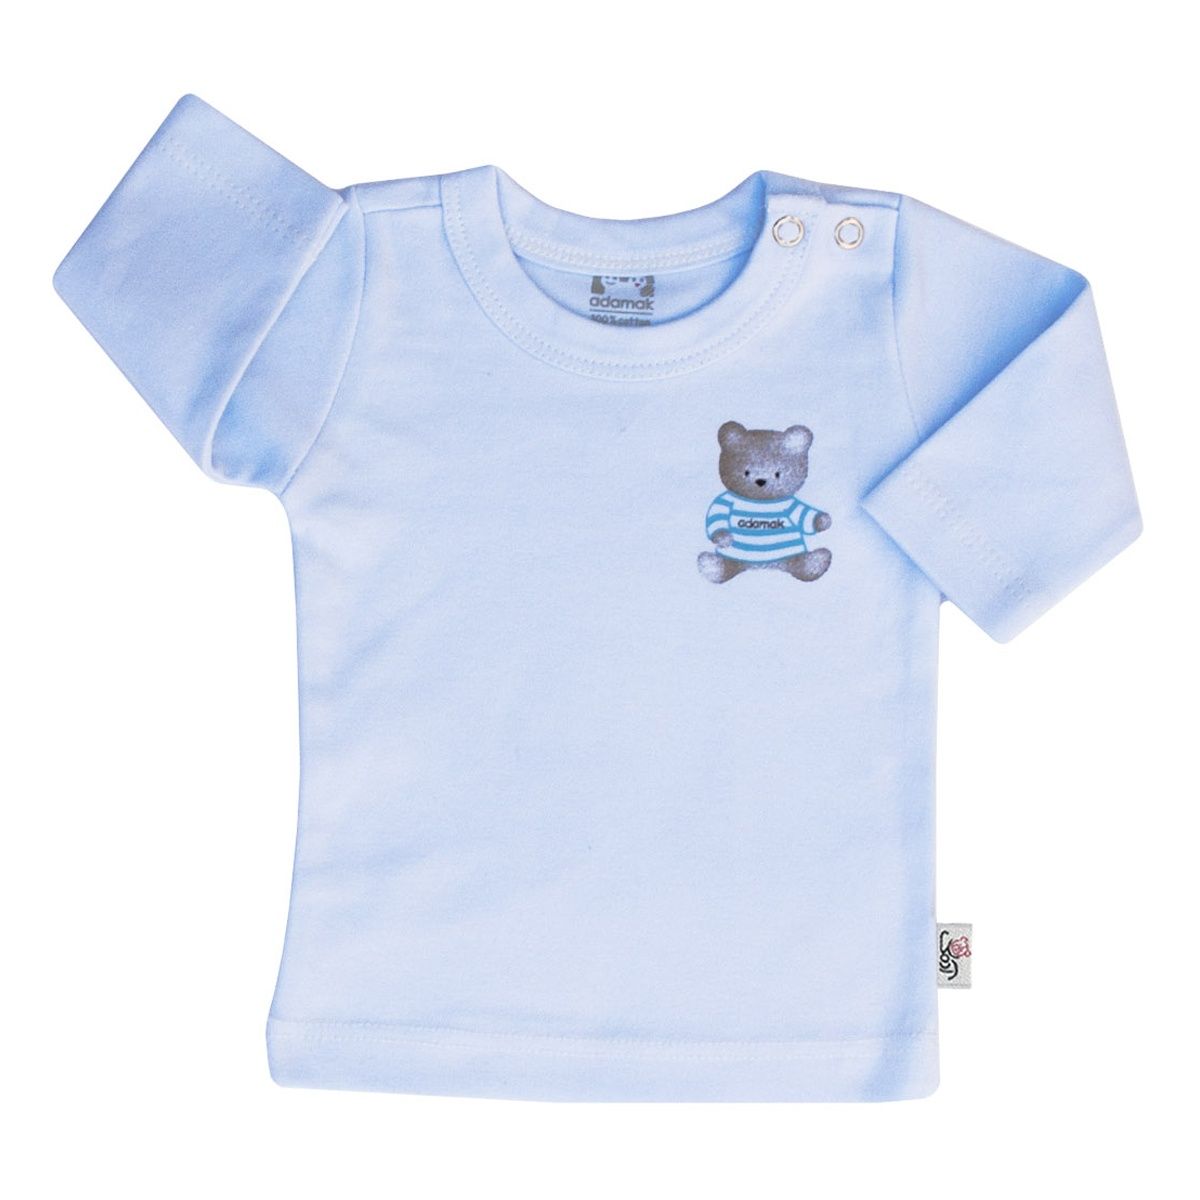 تی شرت آستین بلند نوزادی آدمک طرح خرس رنگ آبی -  - 1